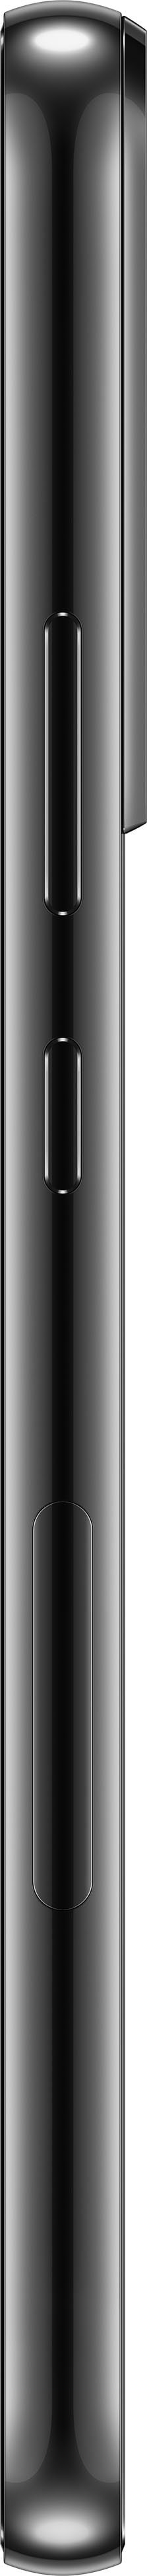 Samsung - Galaxy S22+ 128GB - Phantom Black (AT&T)_6